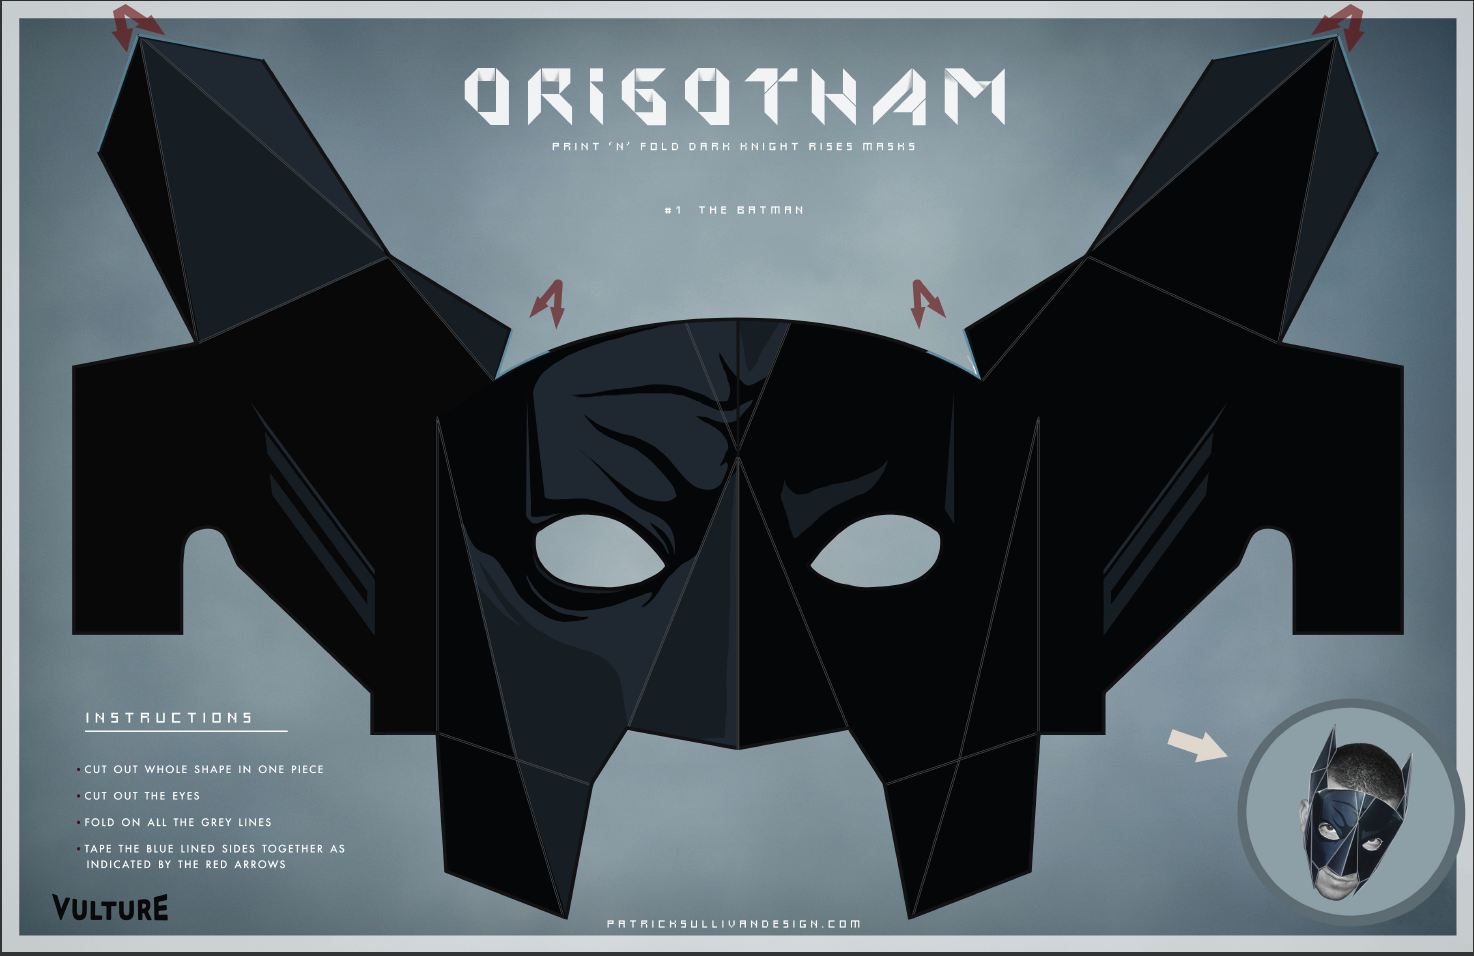 BAT - BLOG : BATMAN TOYS and COLLECTIBLES: ORIGOTHAM BATMAN Papercraft  Masks You Make - Bane and Catwoman Too!